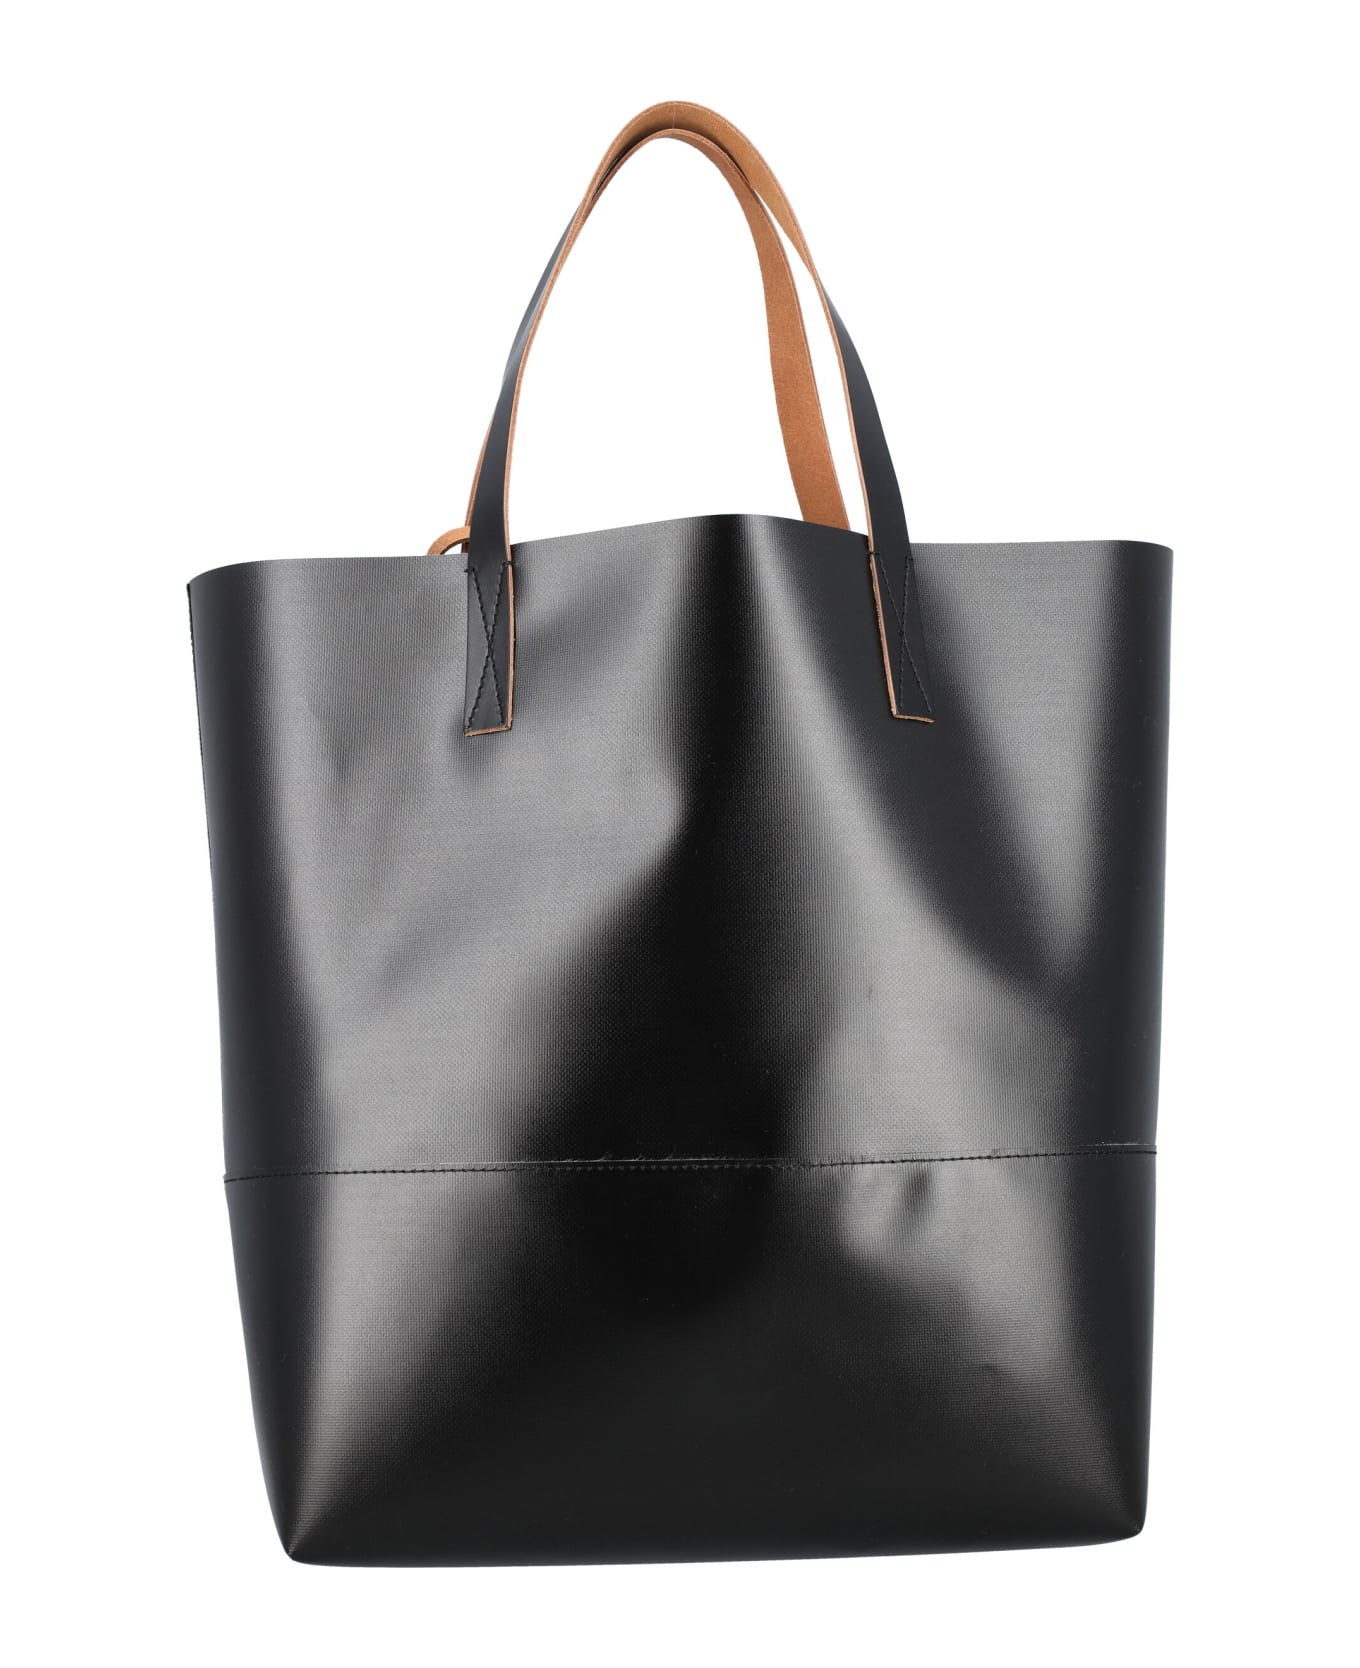 Marni Tribeca Shopping Bag - BLACK トートバッグ